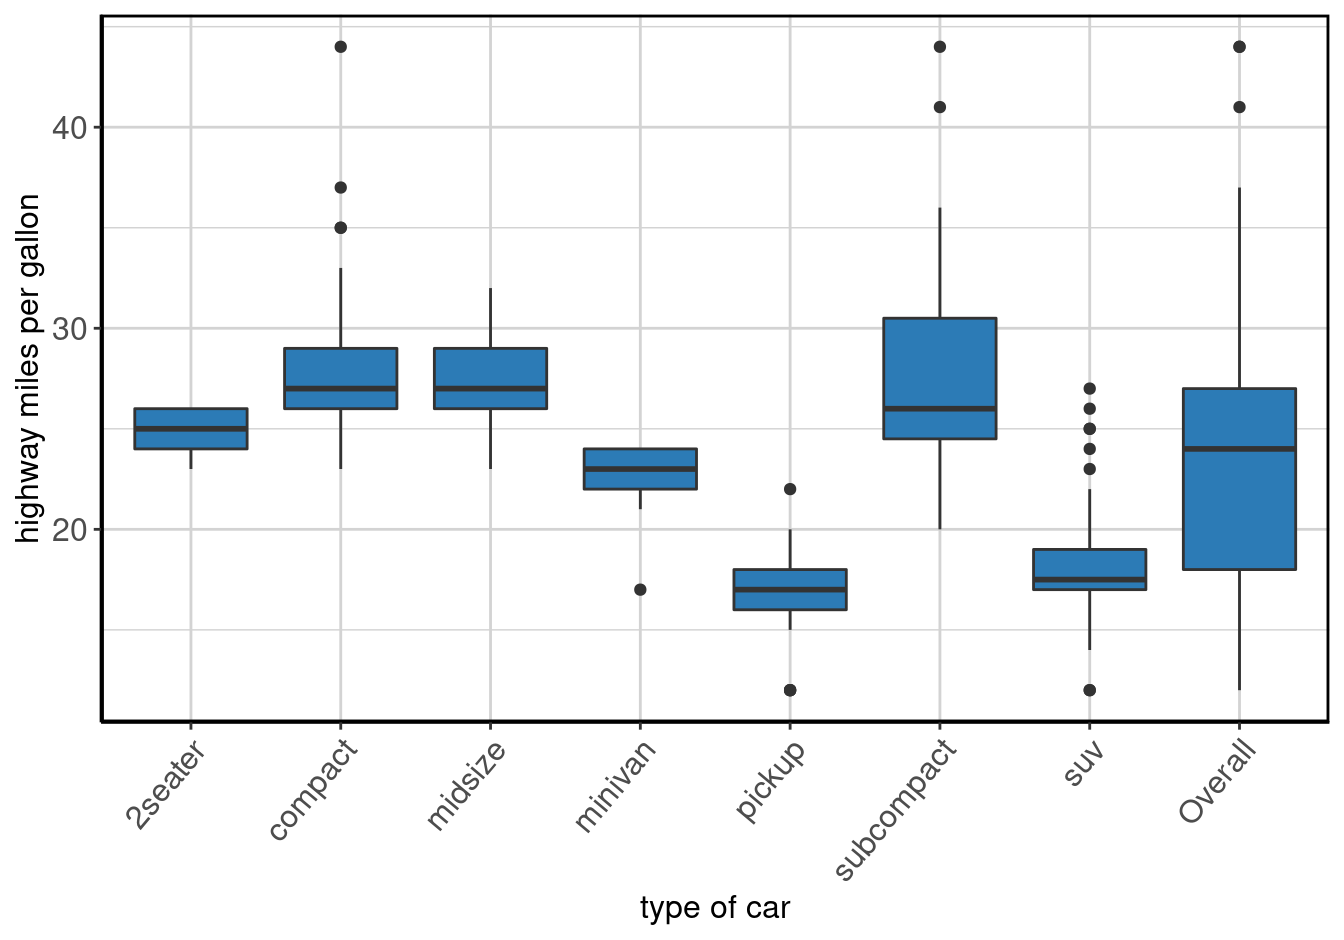 Boxplot of <b>highway miles per gallon</b> by <b>type of car</b>.